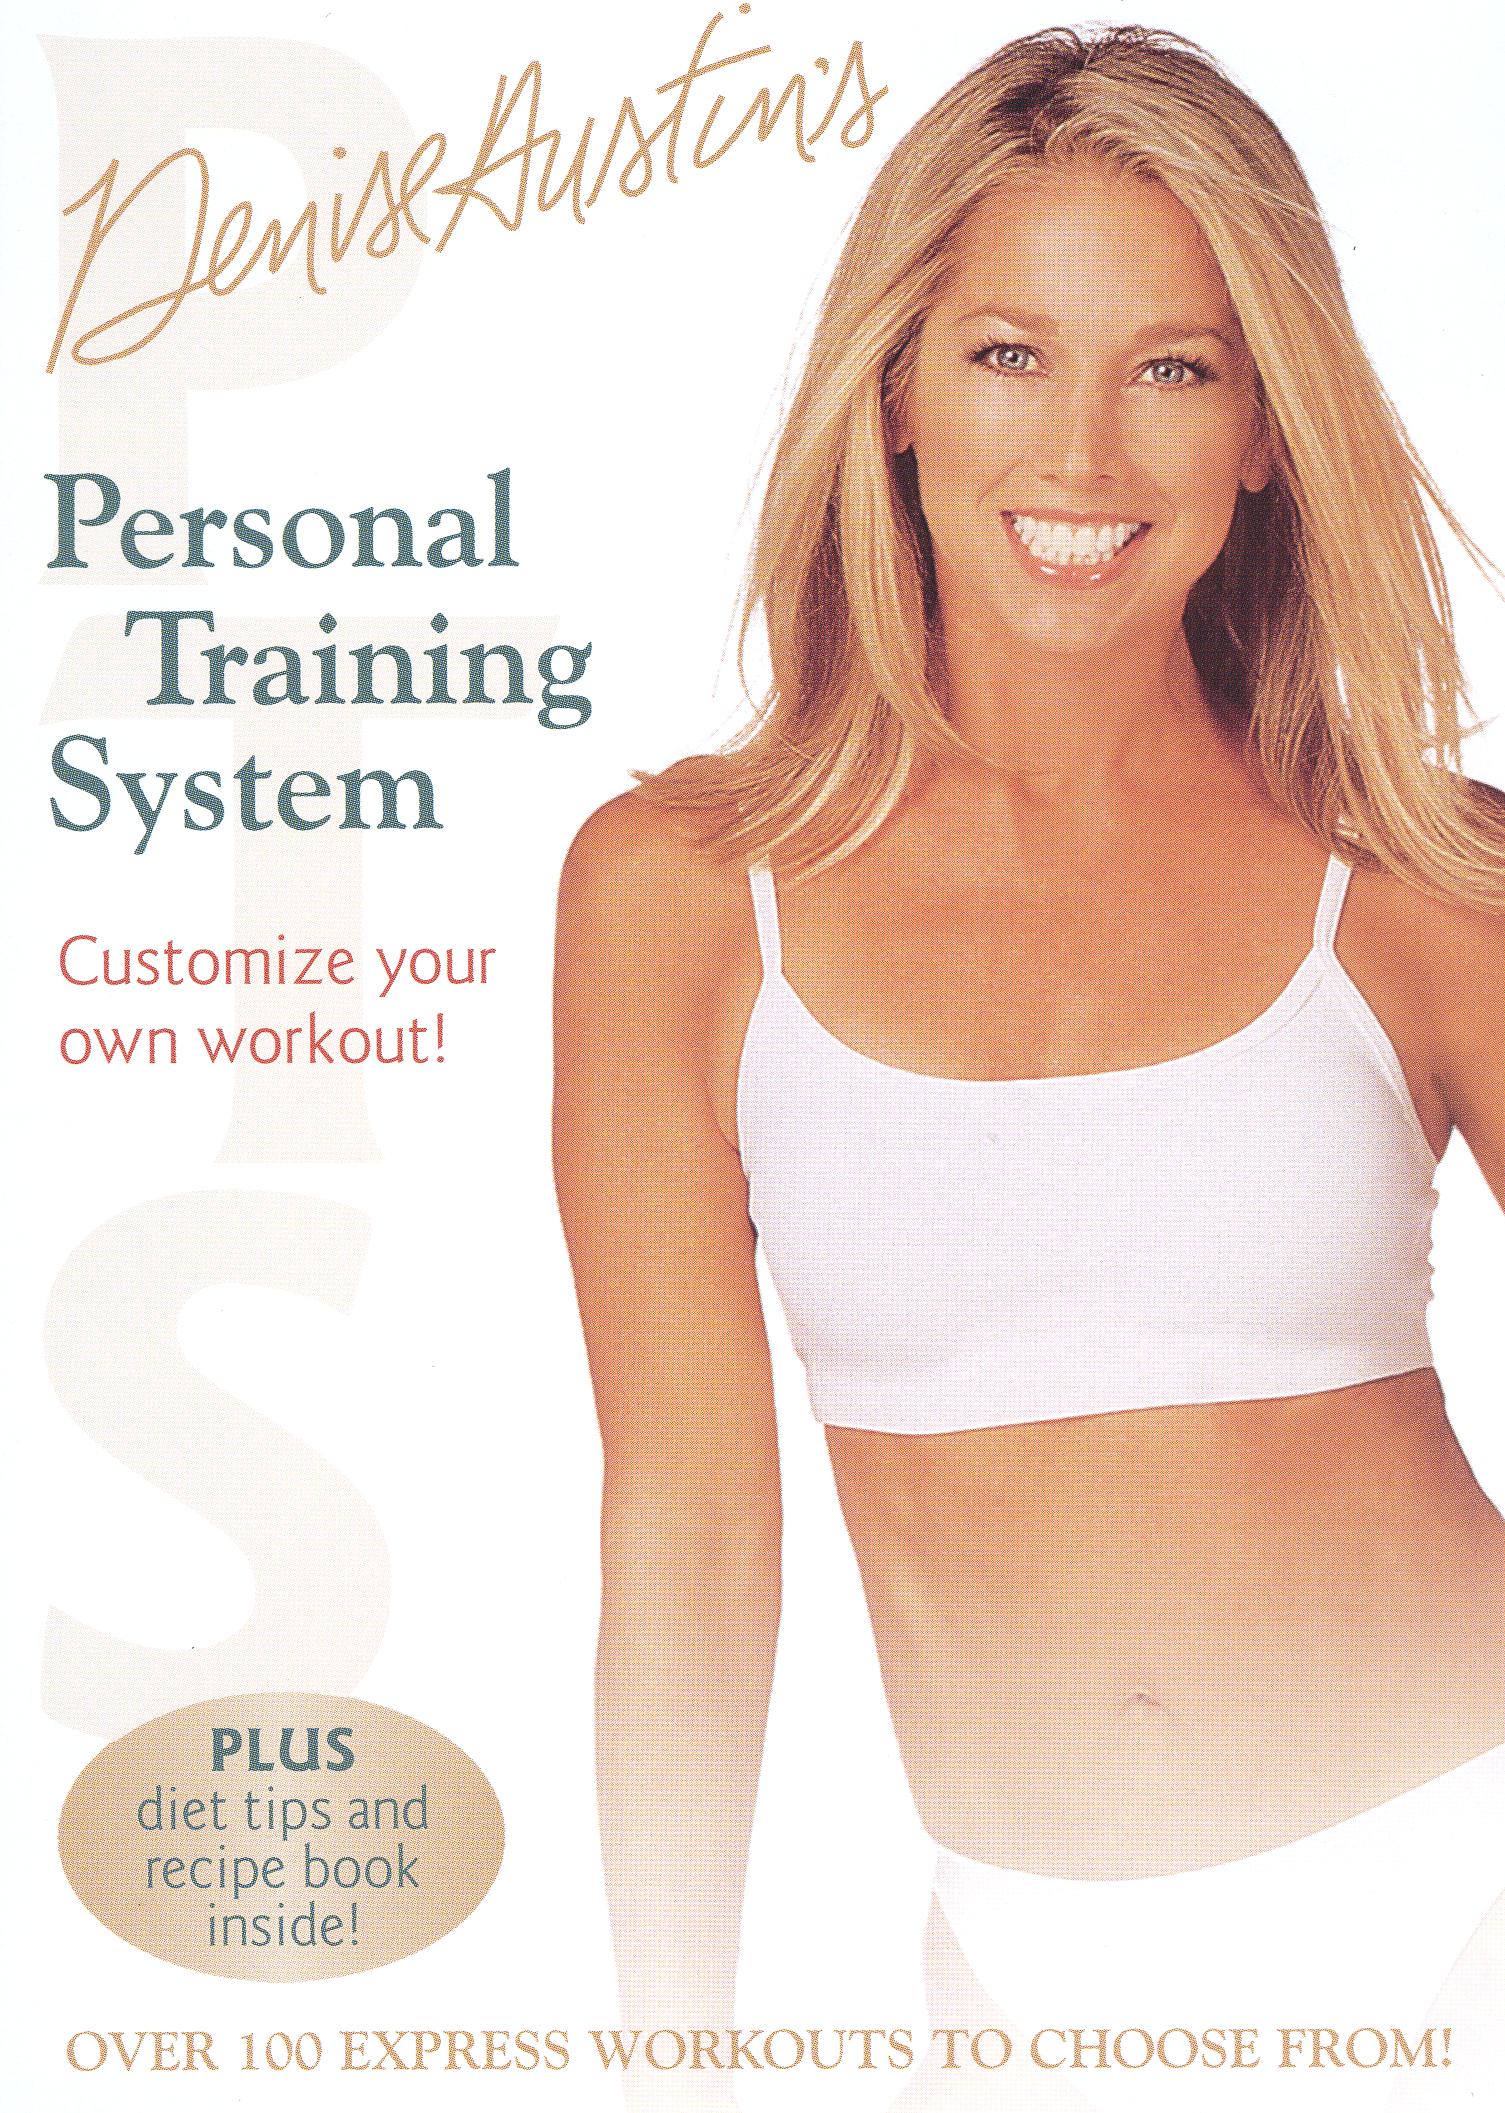 Denise Austin's Personal Training System cover art